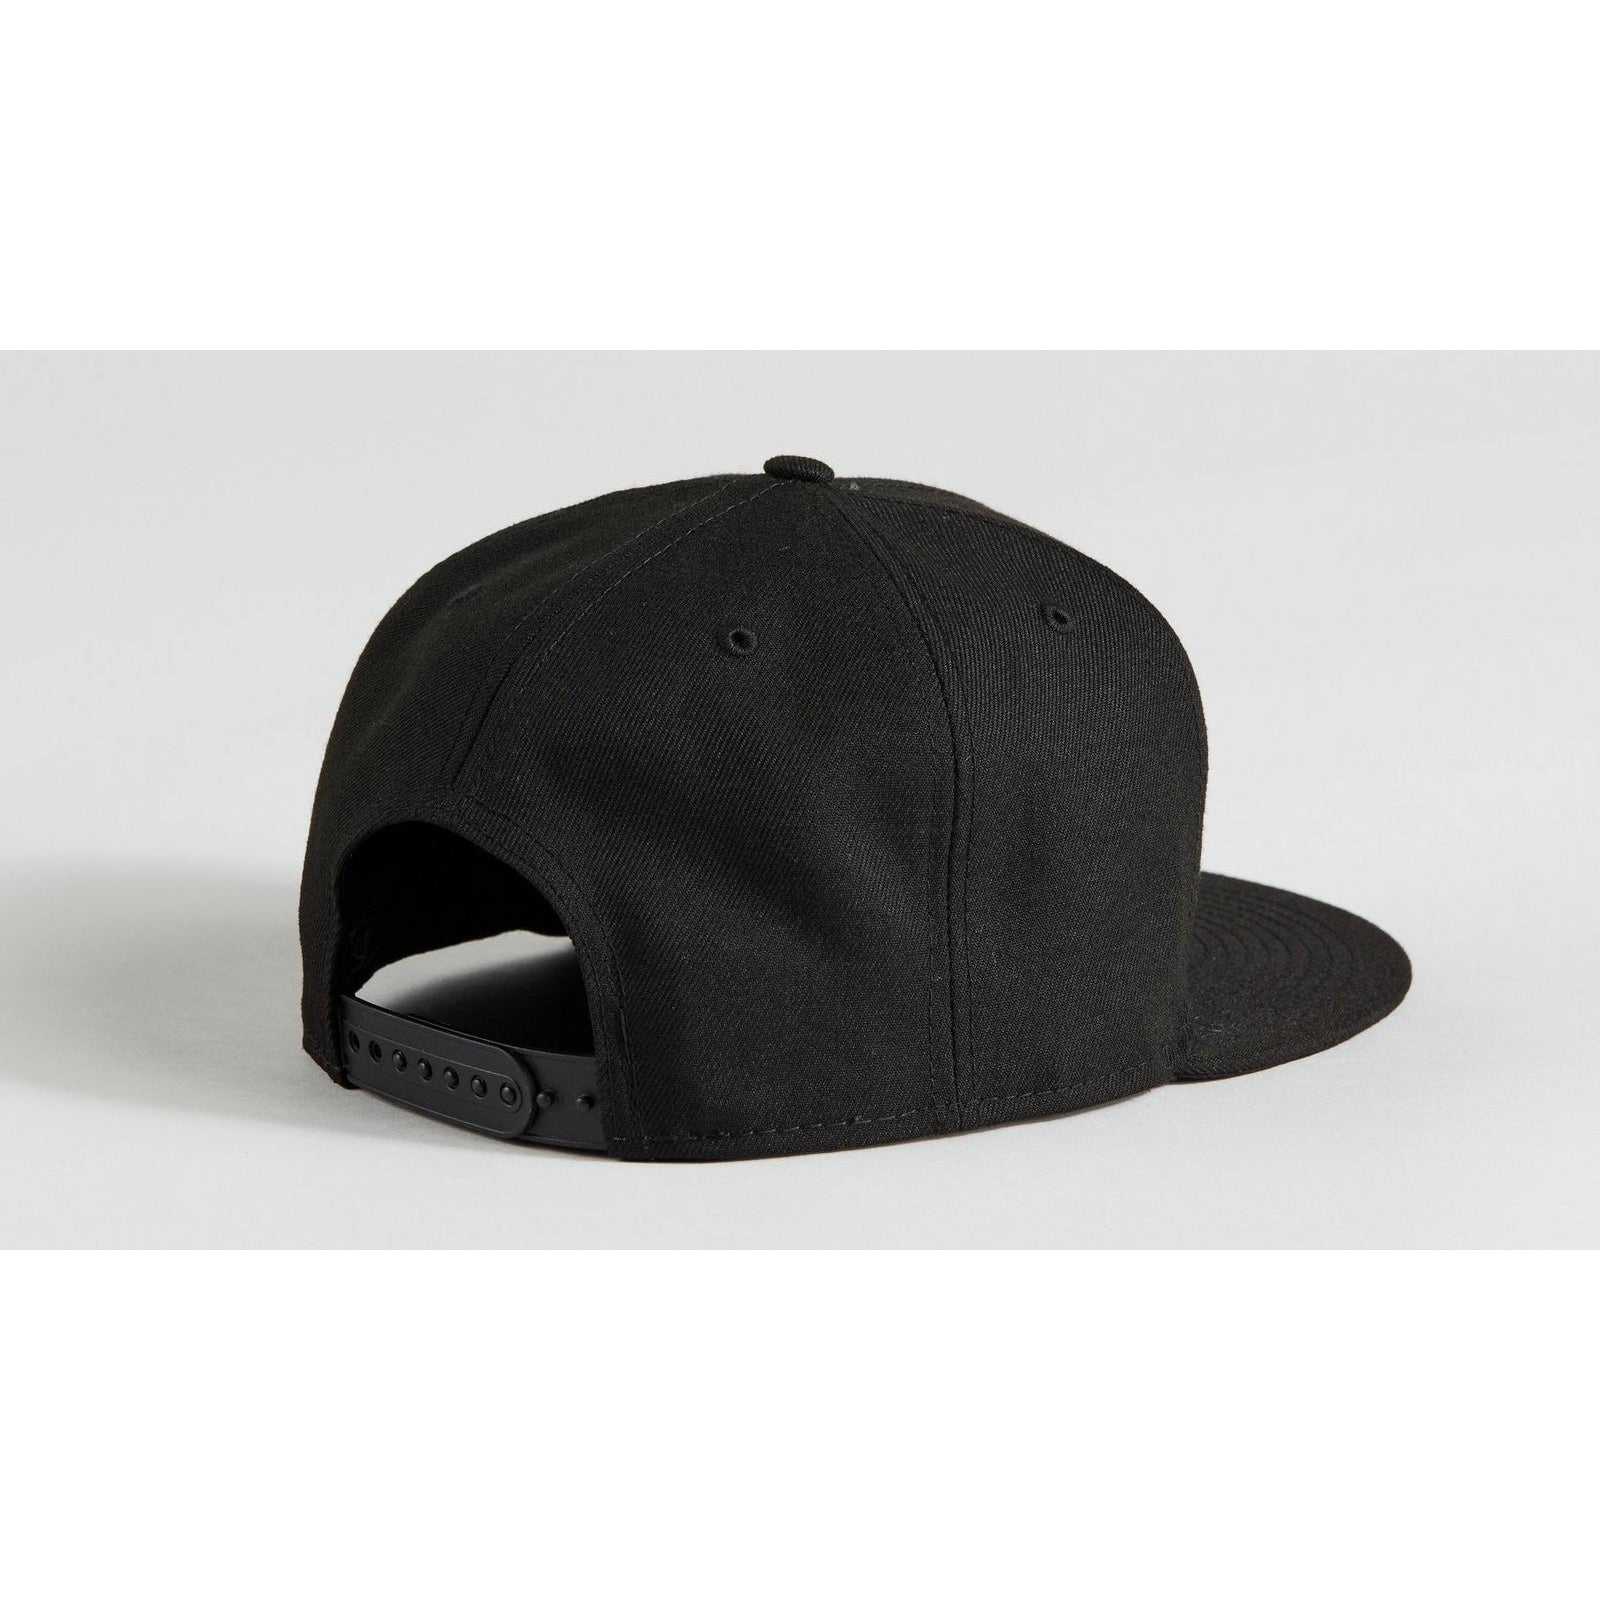 Specialized New Era Metal 9Fifty Snapback Hat - Headwear - Bicycle Warehouse